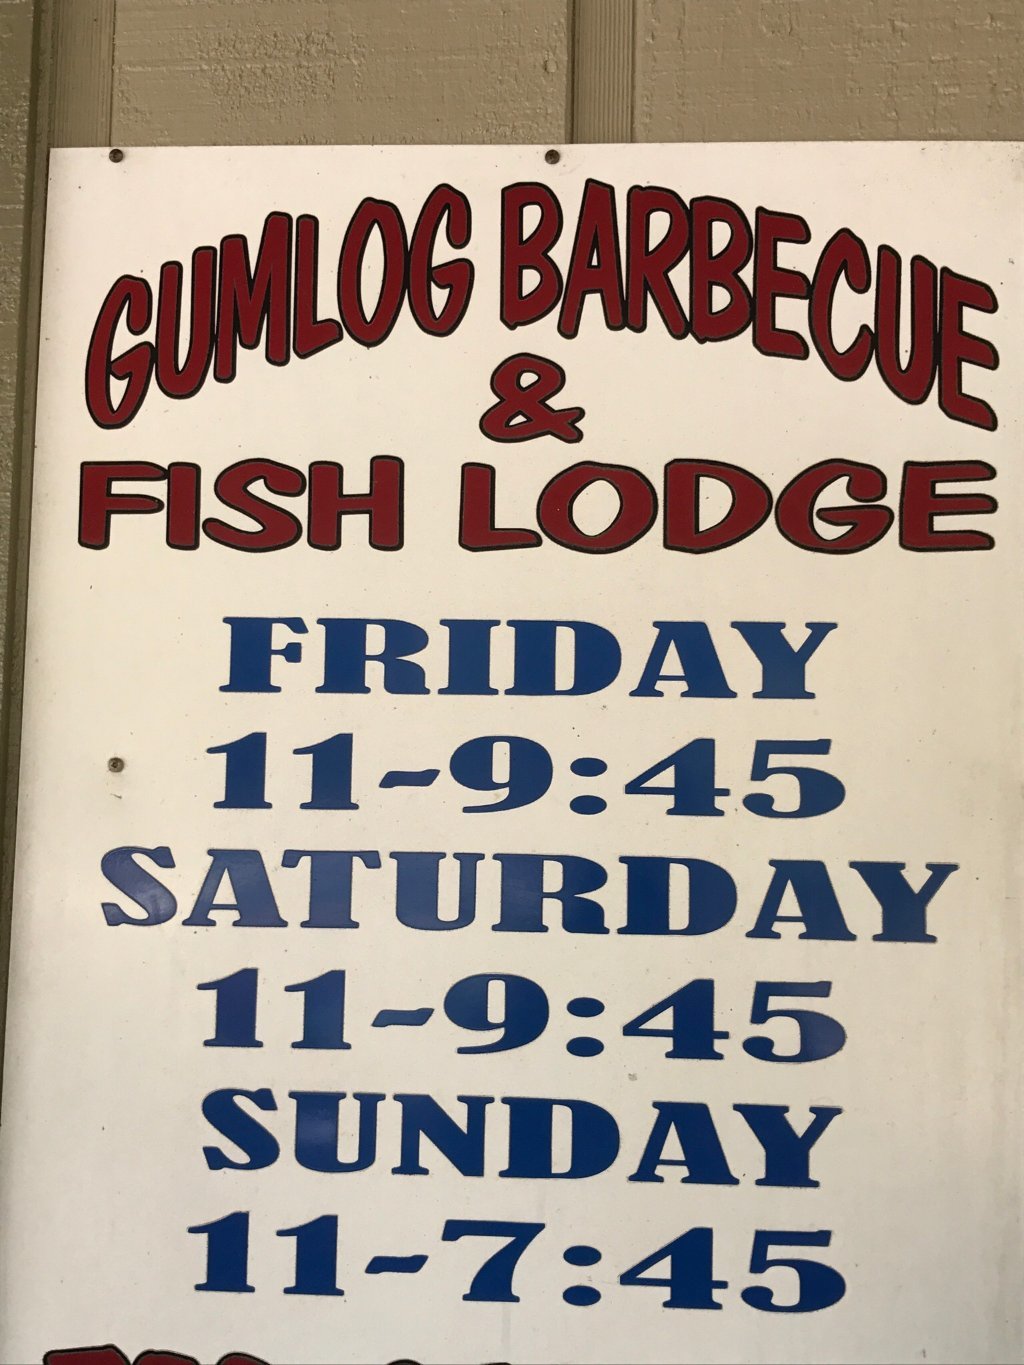 Gumlog Barbecue & Fish Lodge